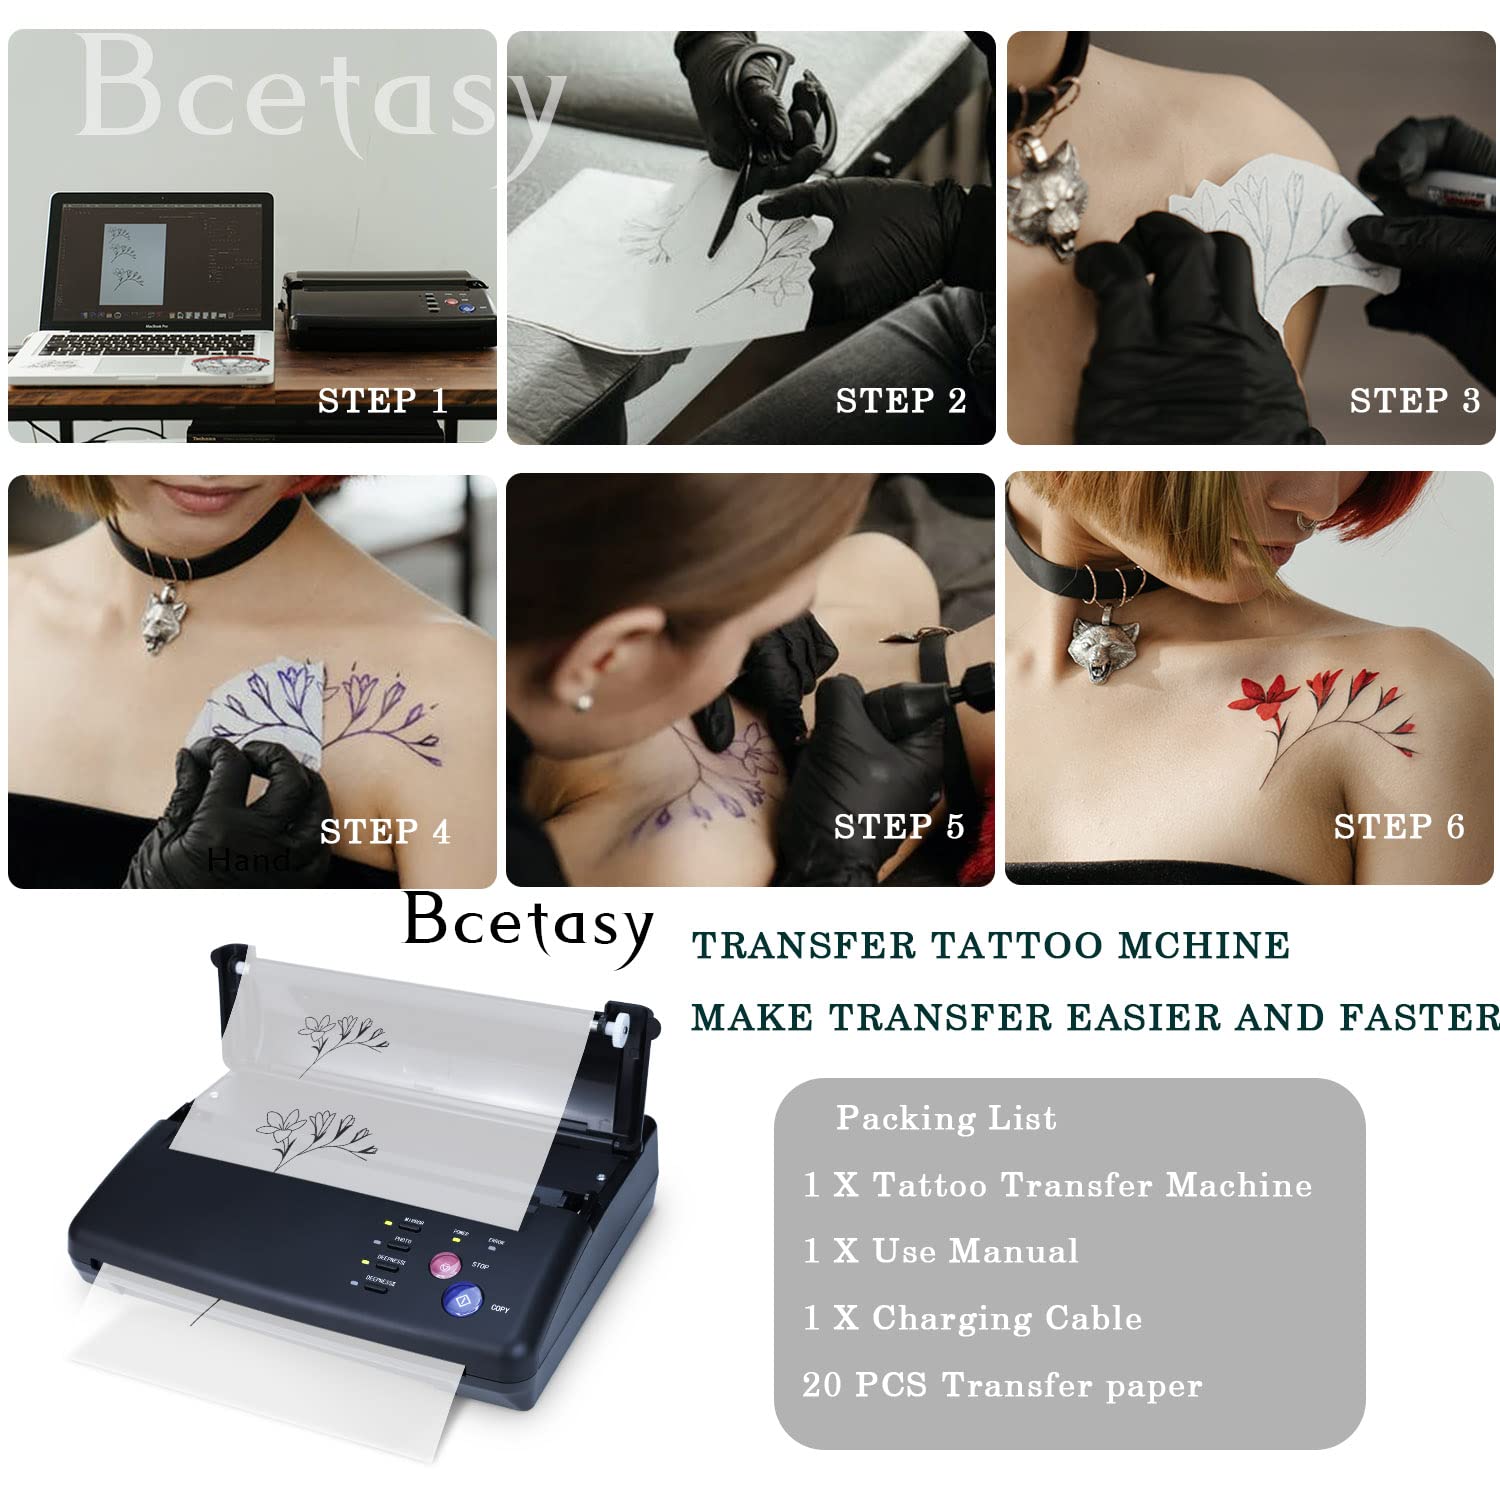 Bcetasy Tattoo Transfer Stencil Printer, with Free 20PCS Transfer Paper, Thermal Copier Machine for Tattoo Transfer Temporary and Permanent Tattoos,Black